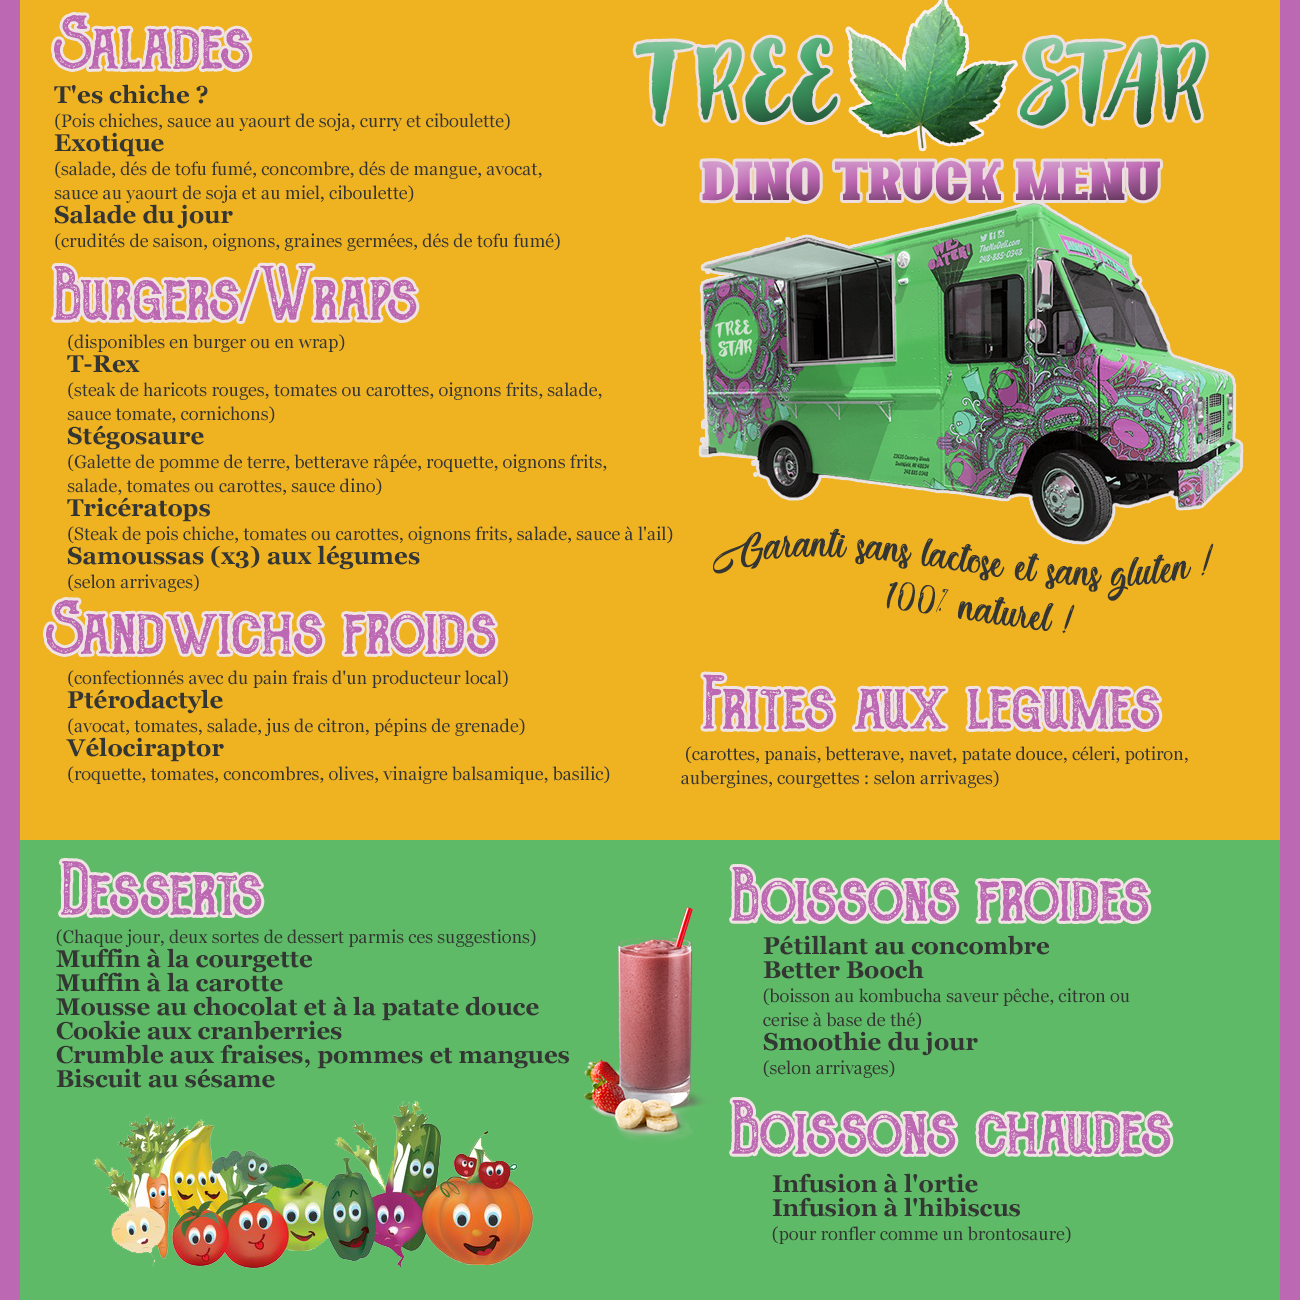 Tree Star : le Dino Truck 100% bio & vegan ! Vw6y